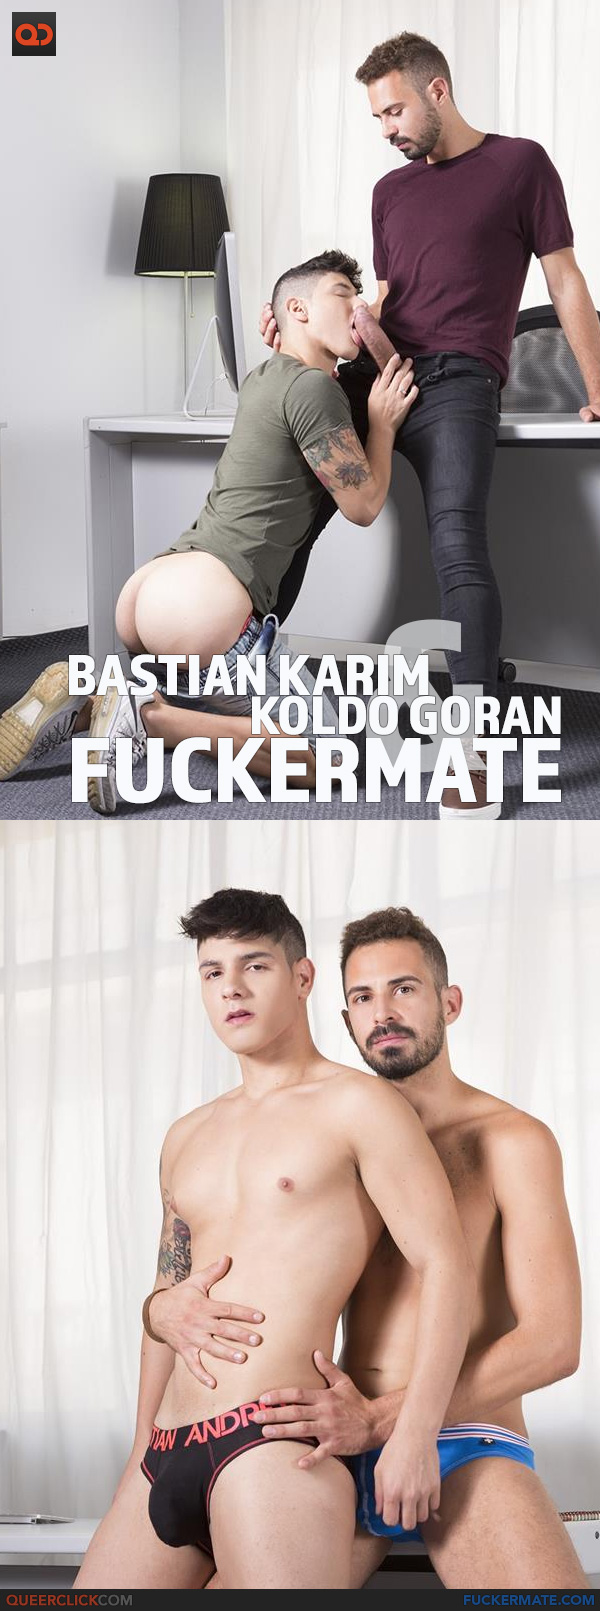 Koldo Goran and Bastian Karim